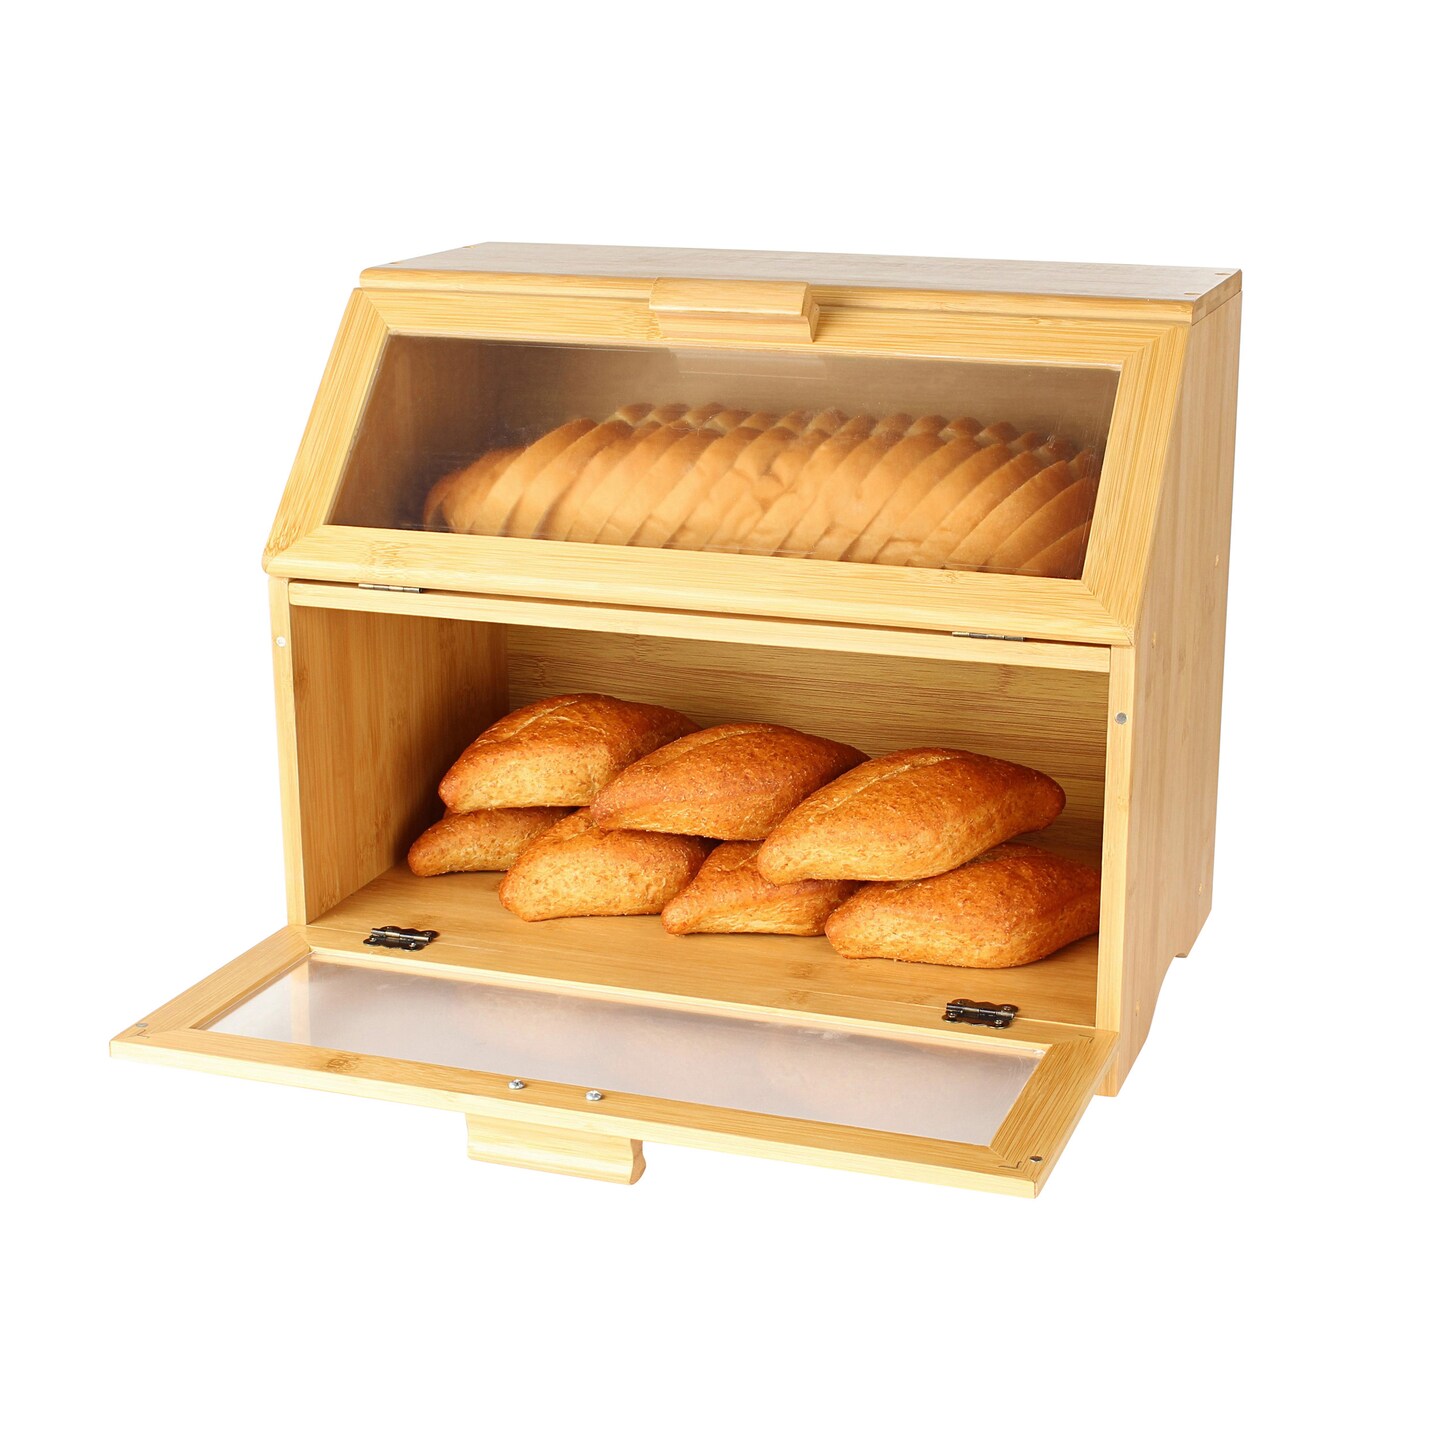 7Penn Double Layer Bamboo Storage Farmhouse Bread Box for Kitchen Countertop